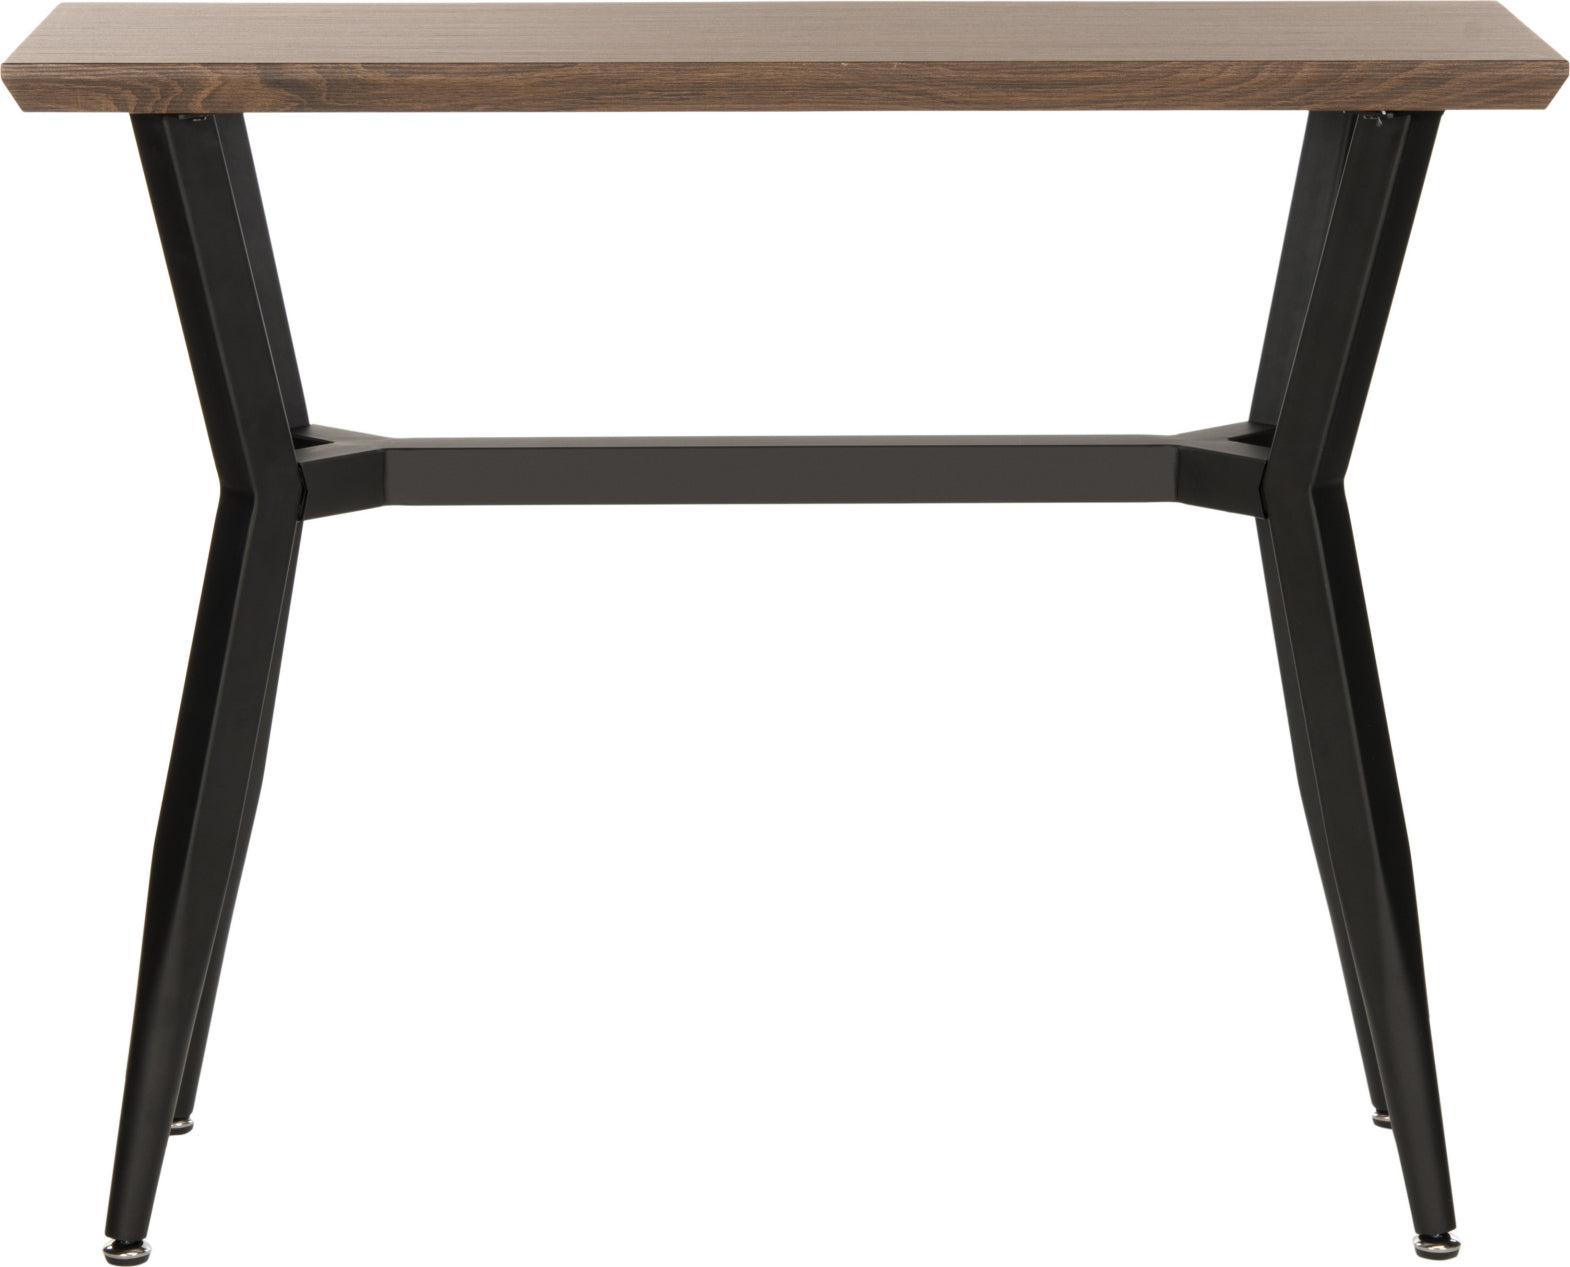 Safavieh Andrew Rectangular Midcentury Modern Console Table Brown Oak Furniture main image